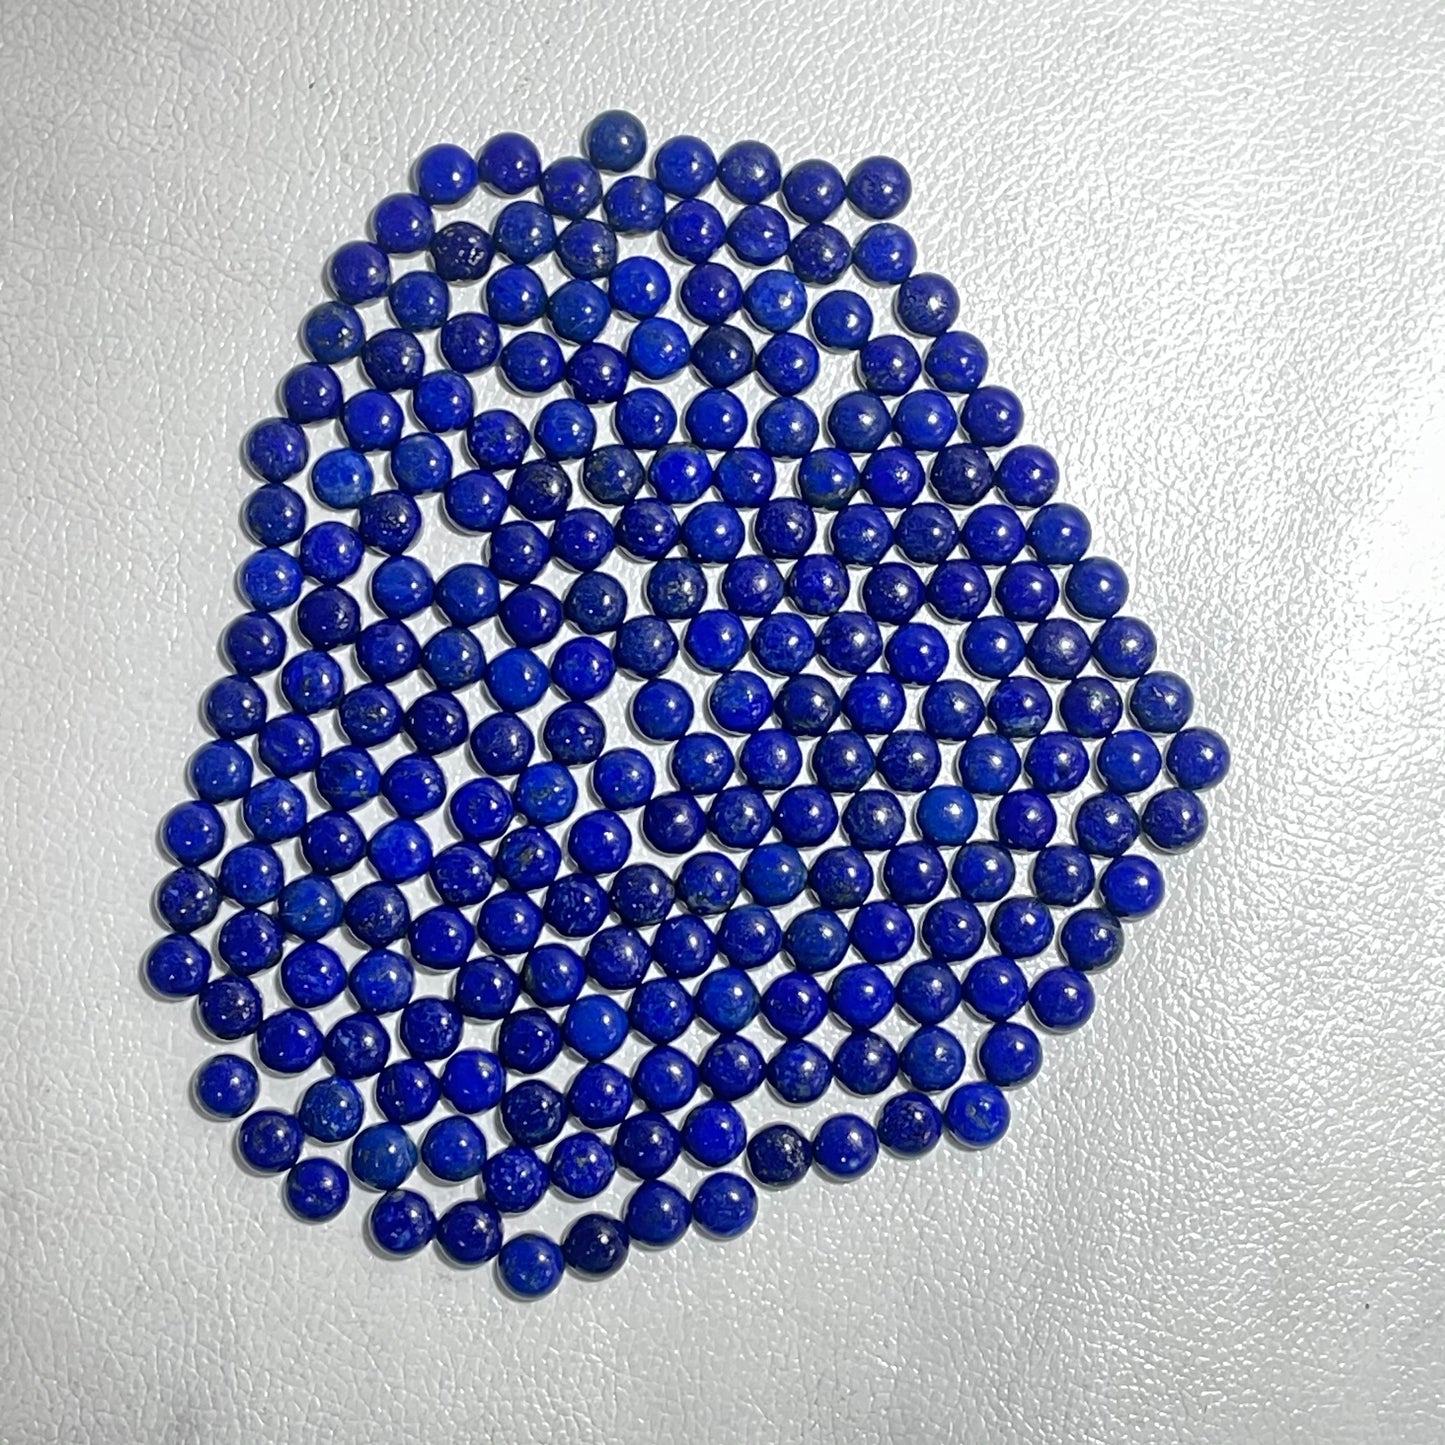 Natural Lapis Lazuli 9 mm Round Cabochon